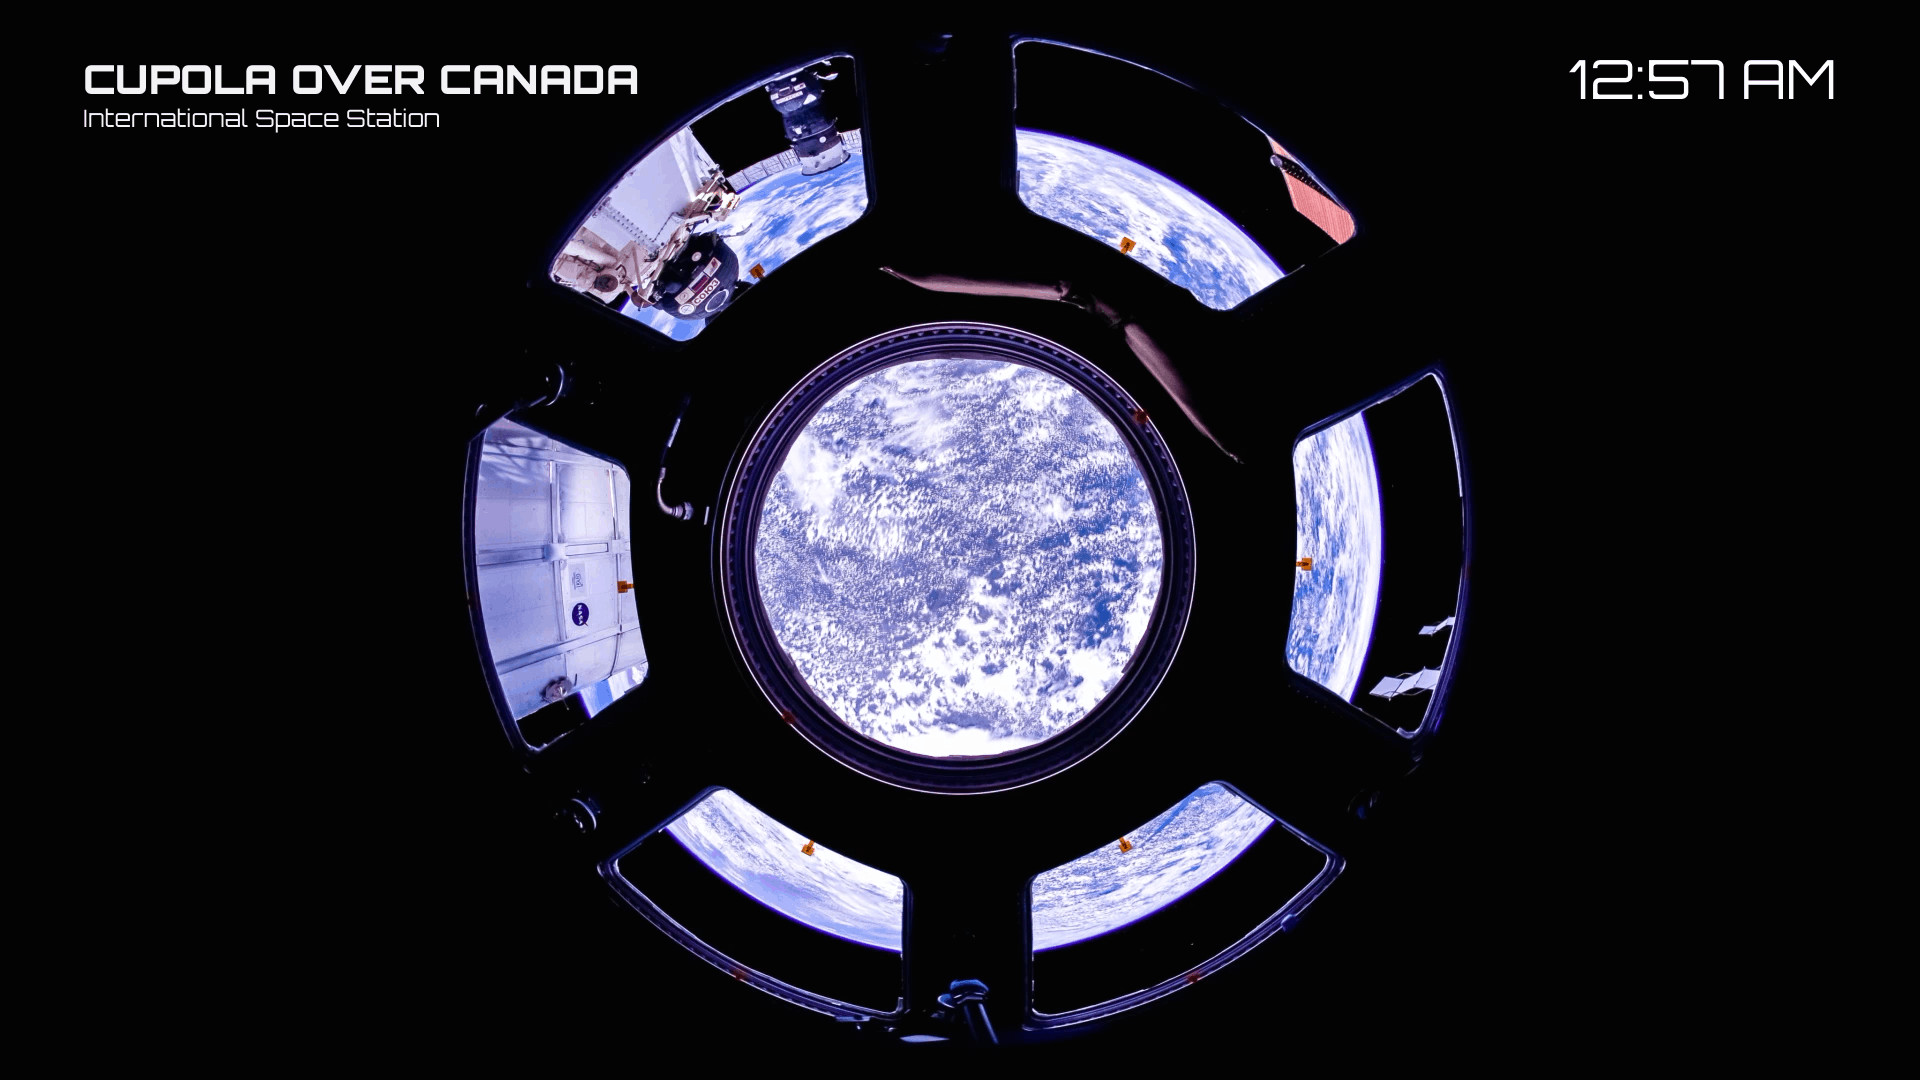 1920x1080 Canada through the ISS cupola window.